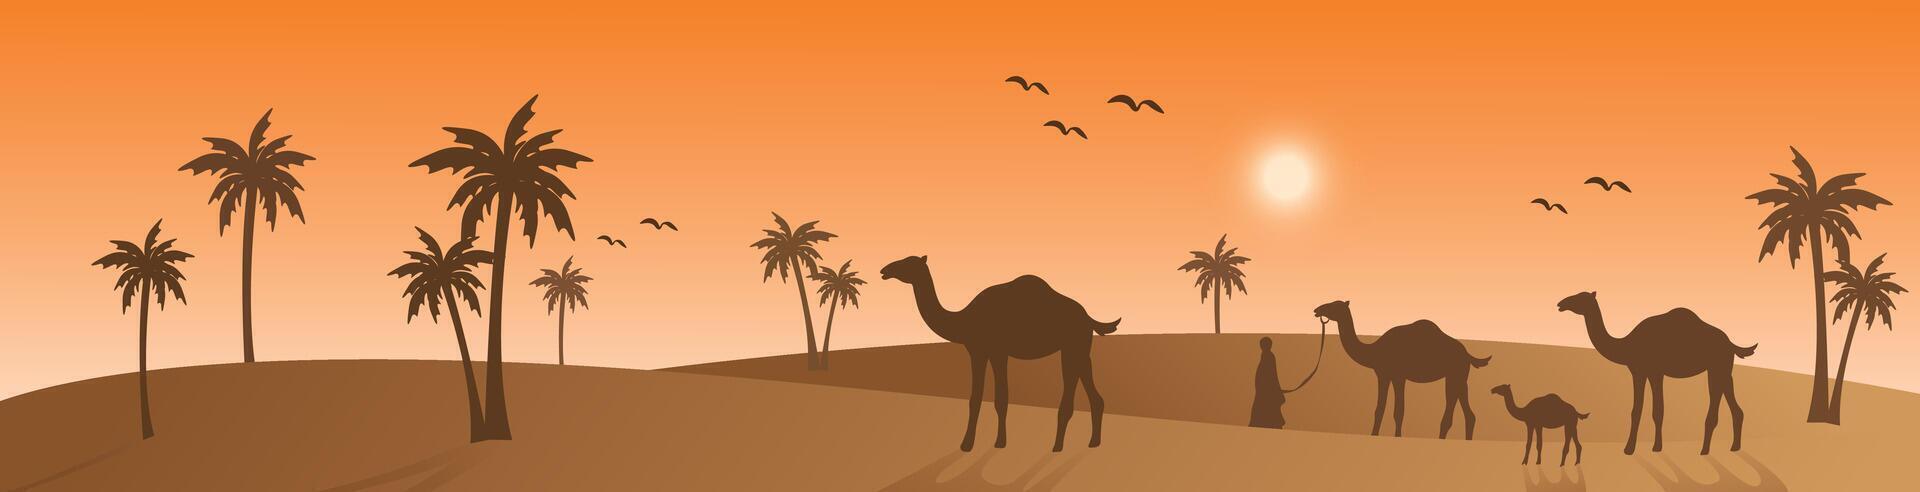 Arábica web horizontal bandera, camello y palma árbol silueta, Desierto ver con hermosa luz de sol, atardecer, amanecer, islámico antecedentes modelo vector